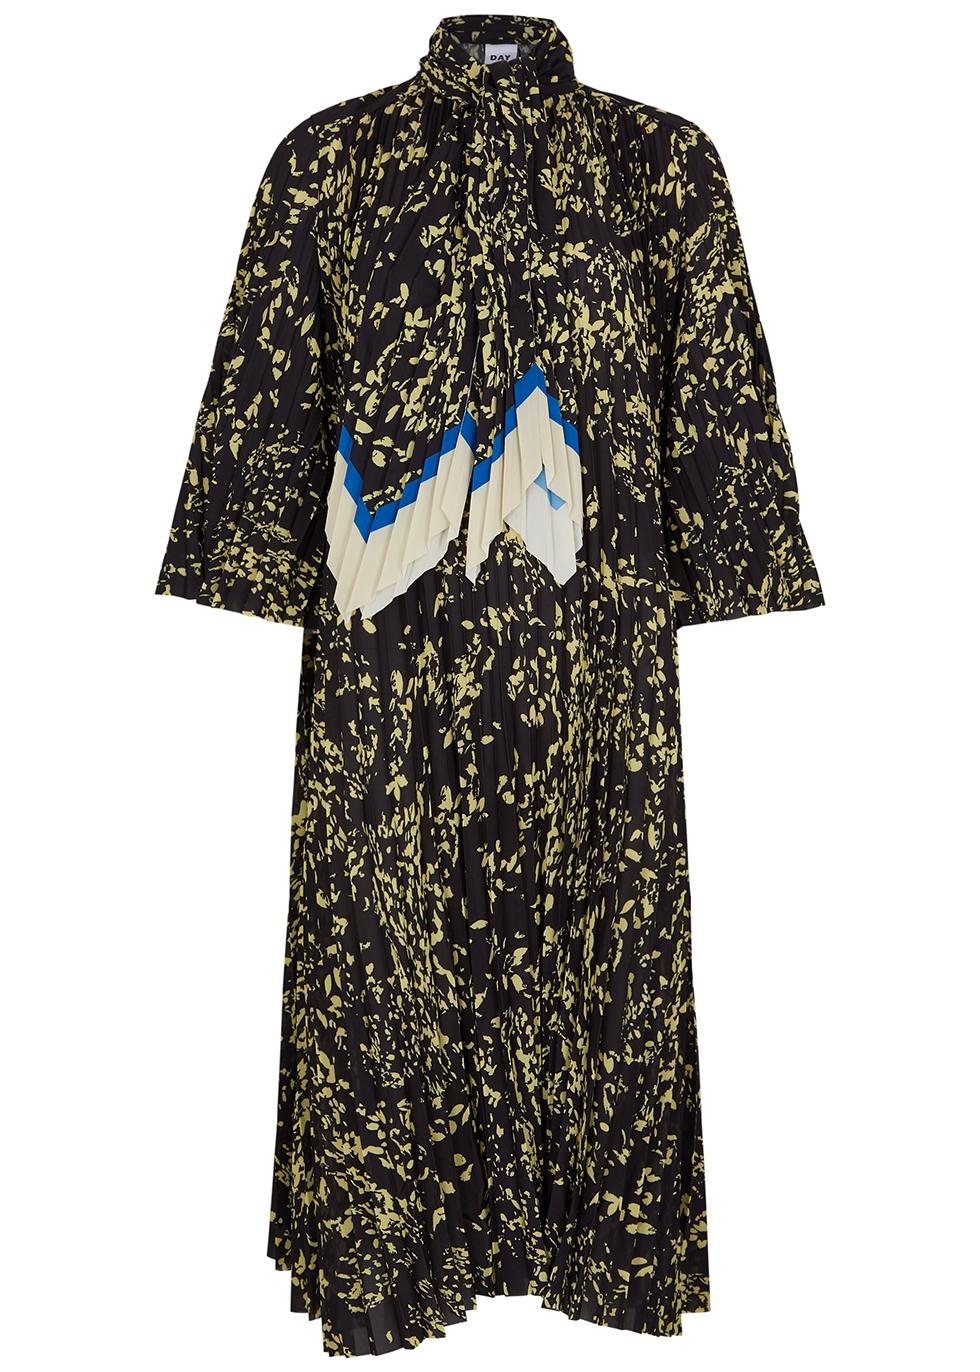 Caine printed pleated matte satin dress by DAY BIRGER ET MIKKELSEN